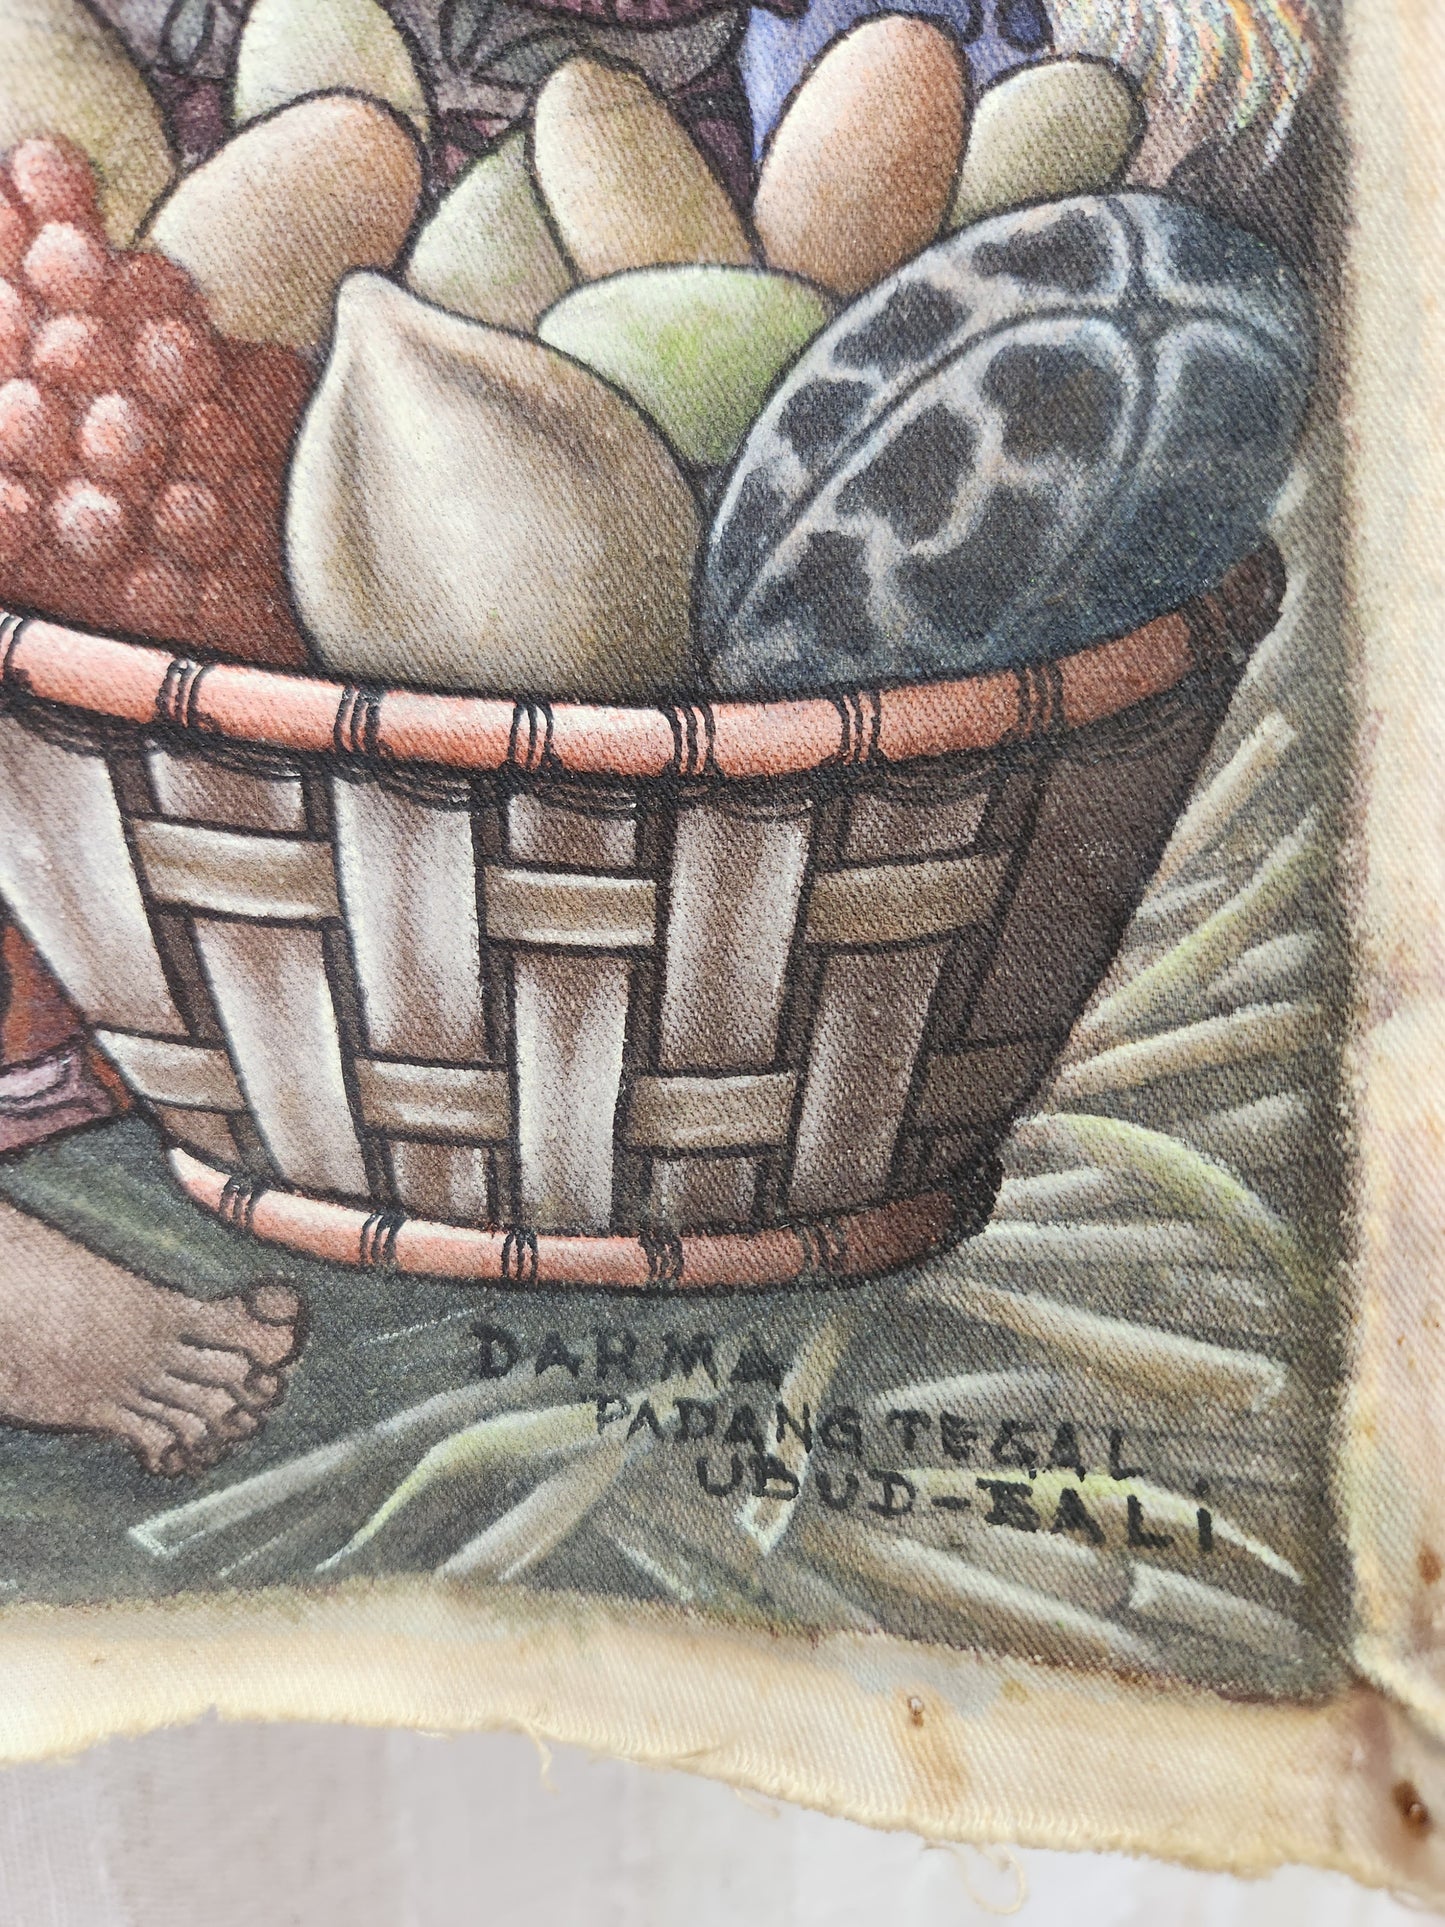 VTG - Darma - Padangtegal Ubud-Bali "Harvest Time" Watercolor on Fabric Painting - 17.5x25.5